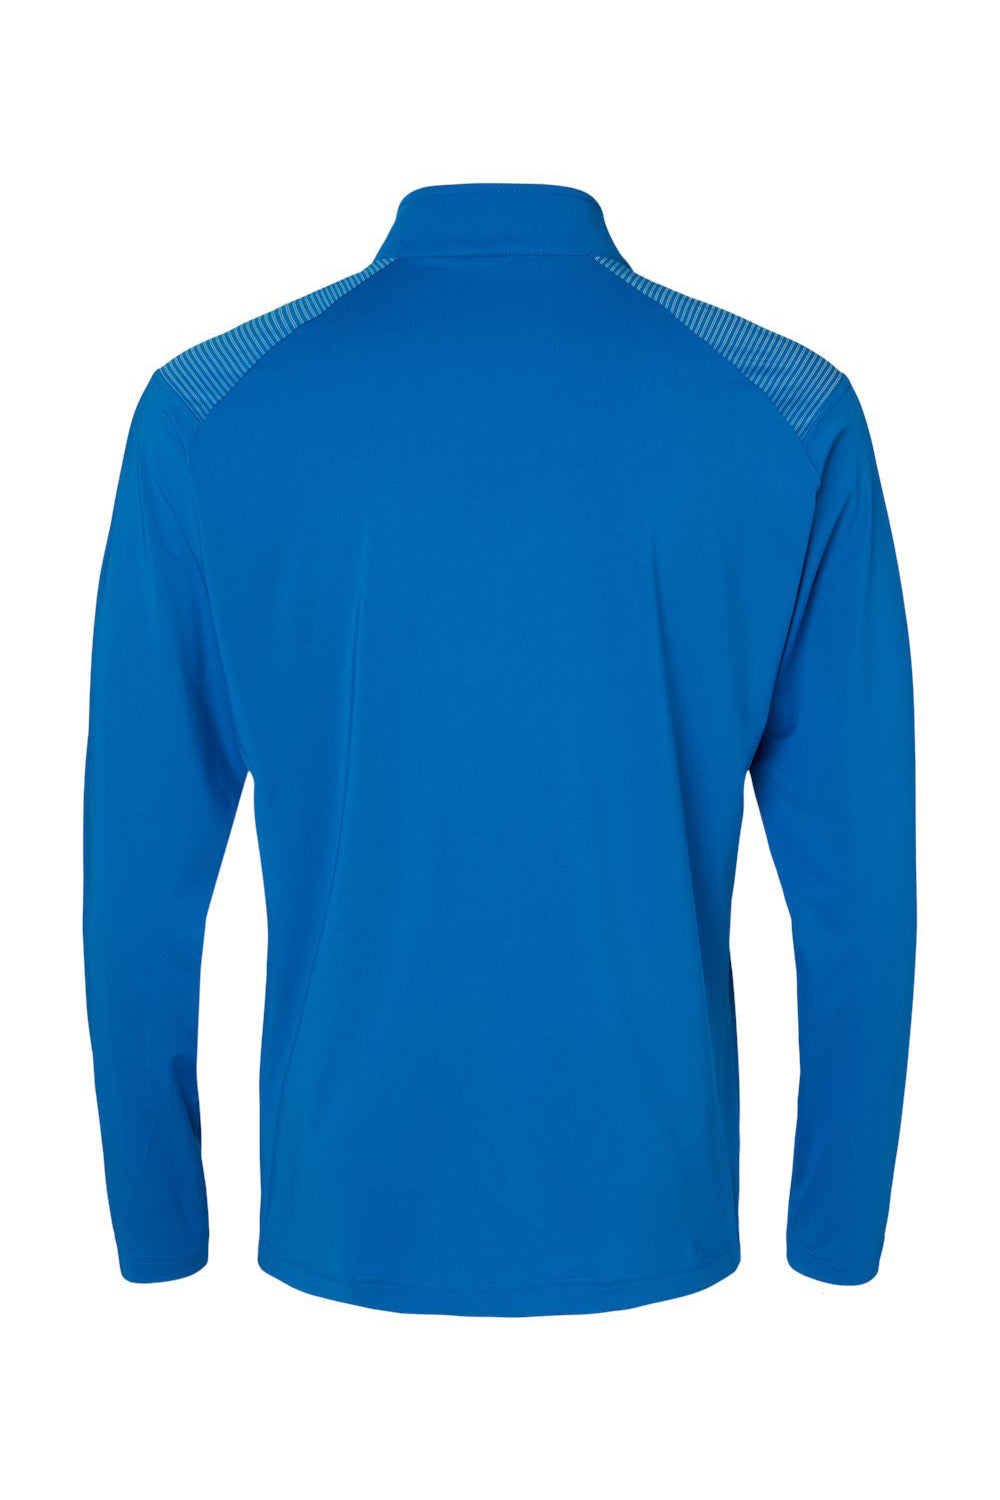 Adidas A520 Mens Shoulder Stripe 1/4 Zip Pullover Glory Blue Flat Back